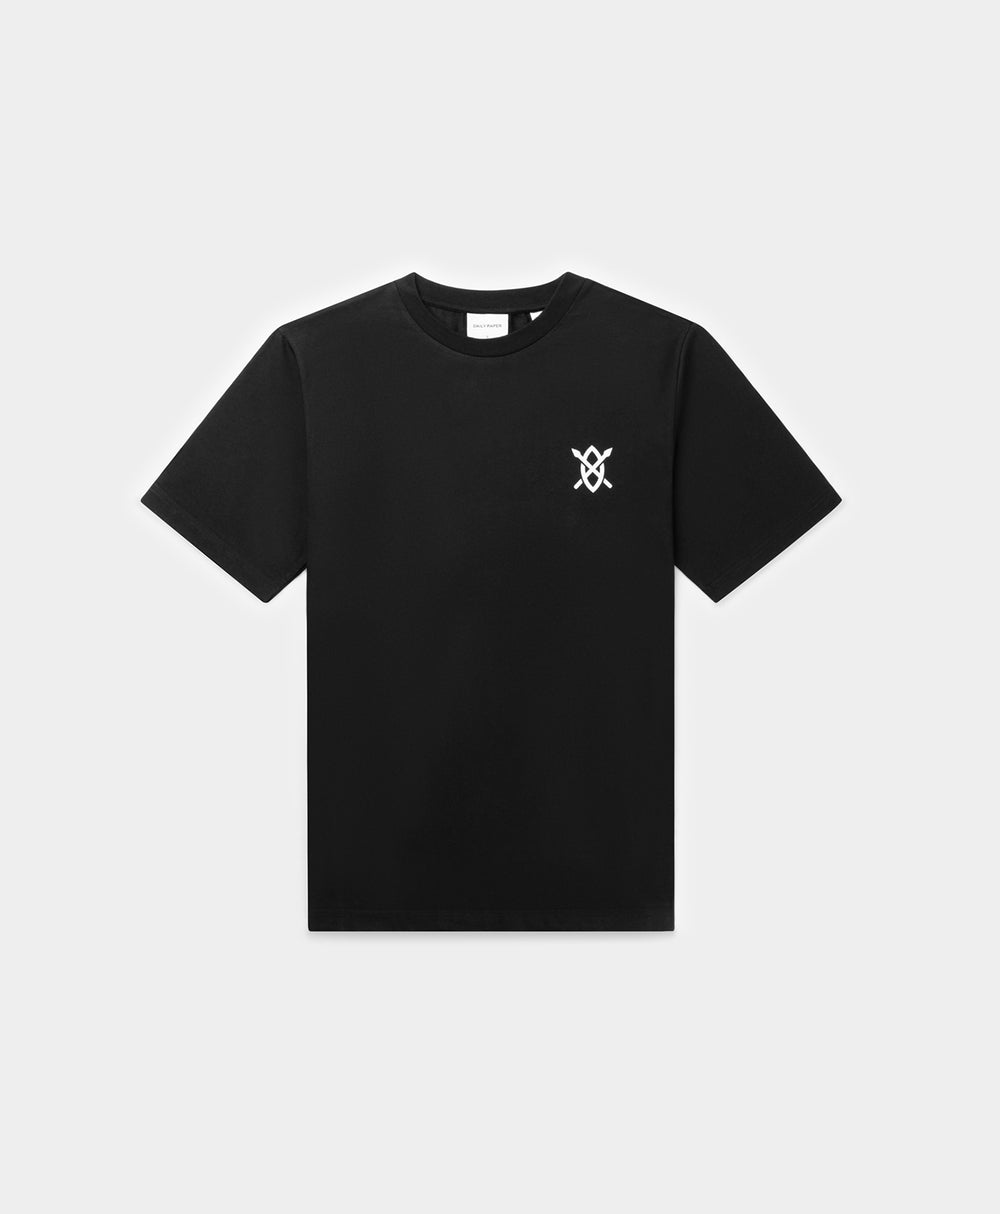 DP - Black Amsterdam Flagship Store T-Shirt - Packshot - Rear